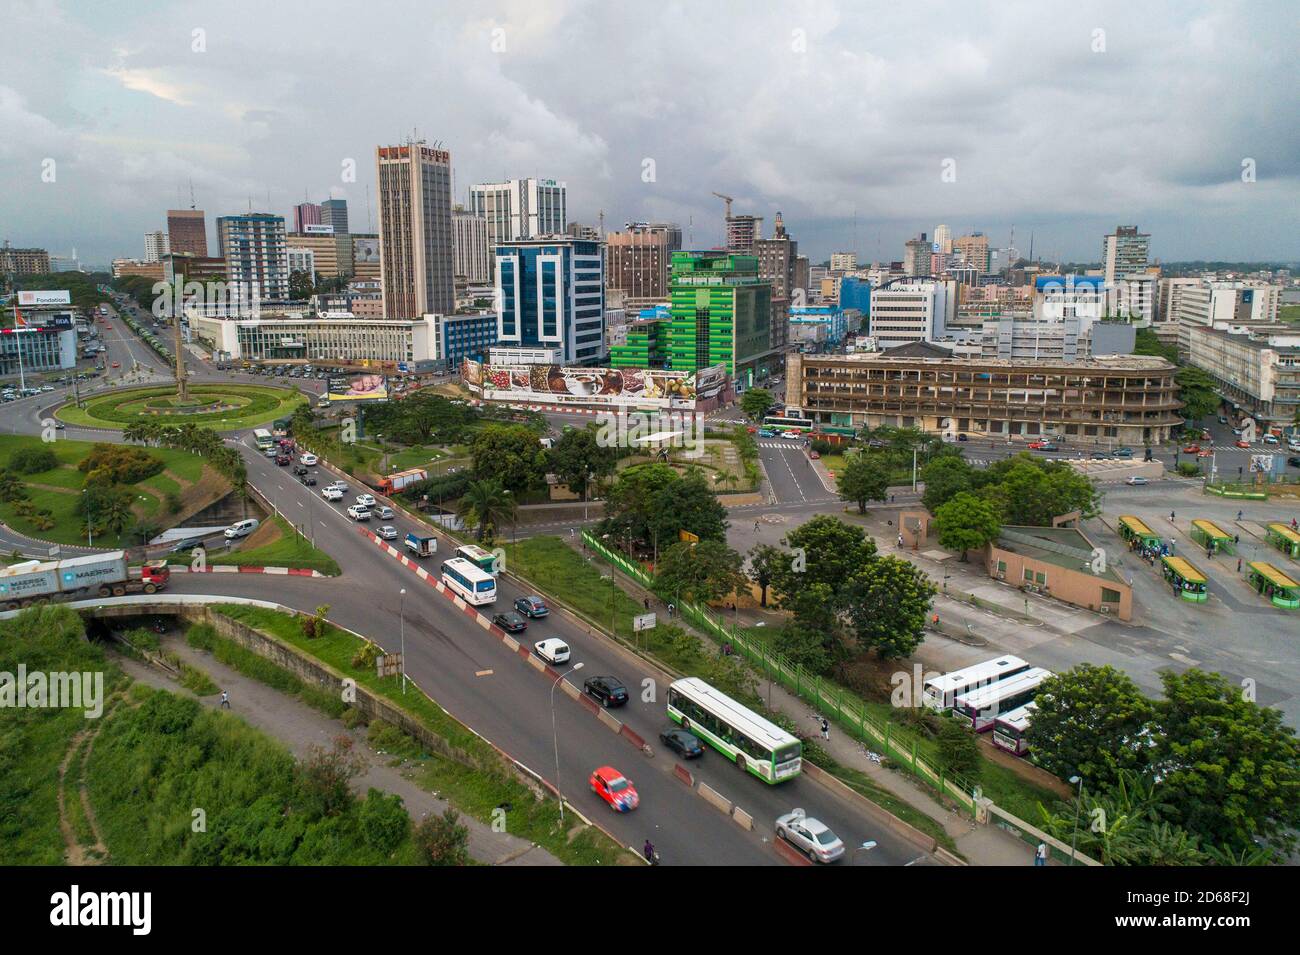 Cote d'Ivoire (Ivory Coast), Abidjan: aerial view of the business district of Le Plateau. Office buildings and traffic in 'place de la Republique' squ Stock Photo